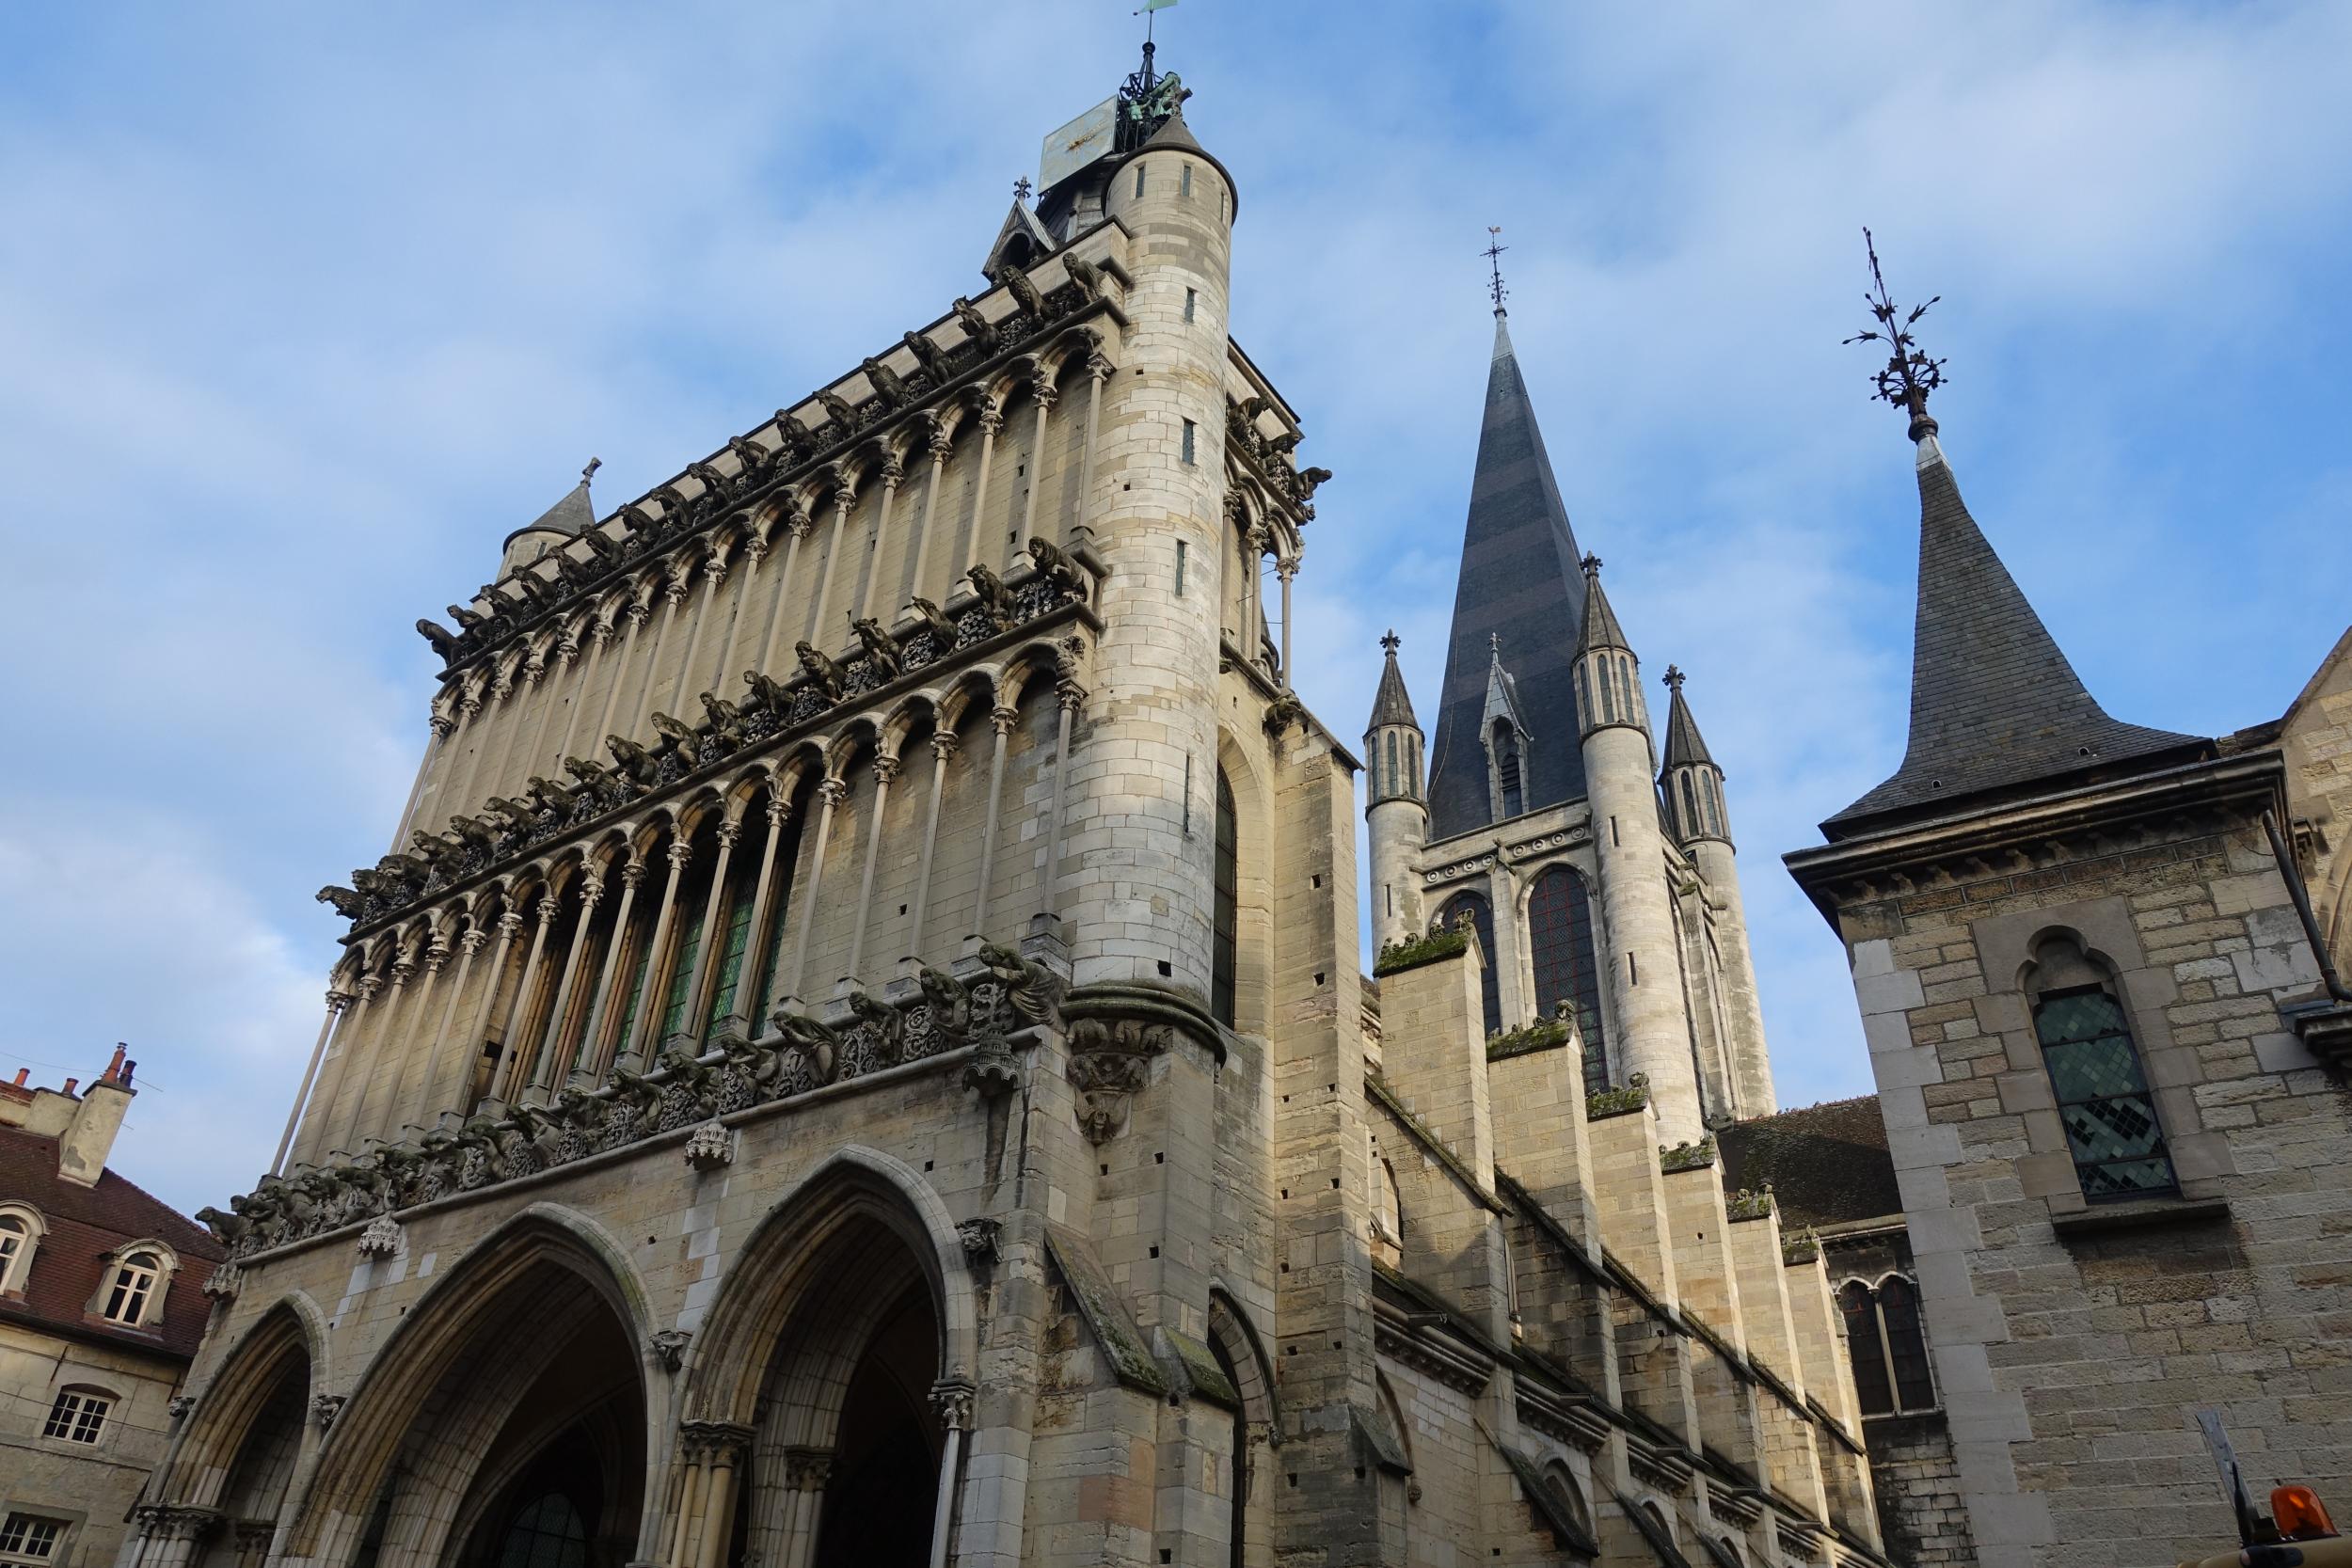 Dijon’s Notre Dame showcases 13th century Gothic architecture